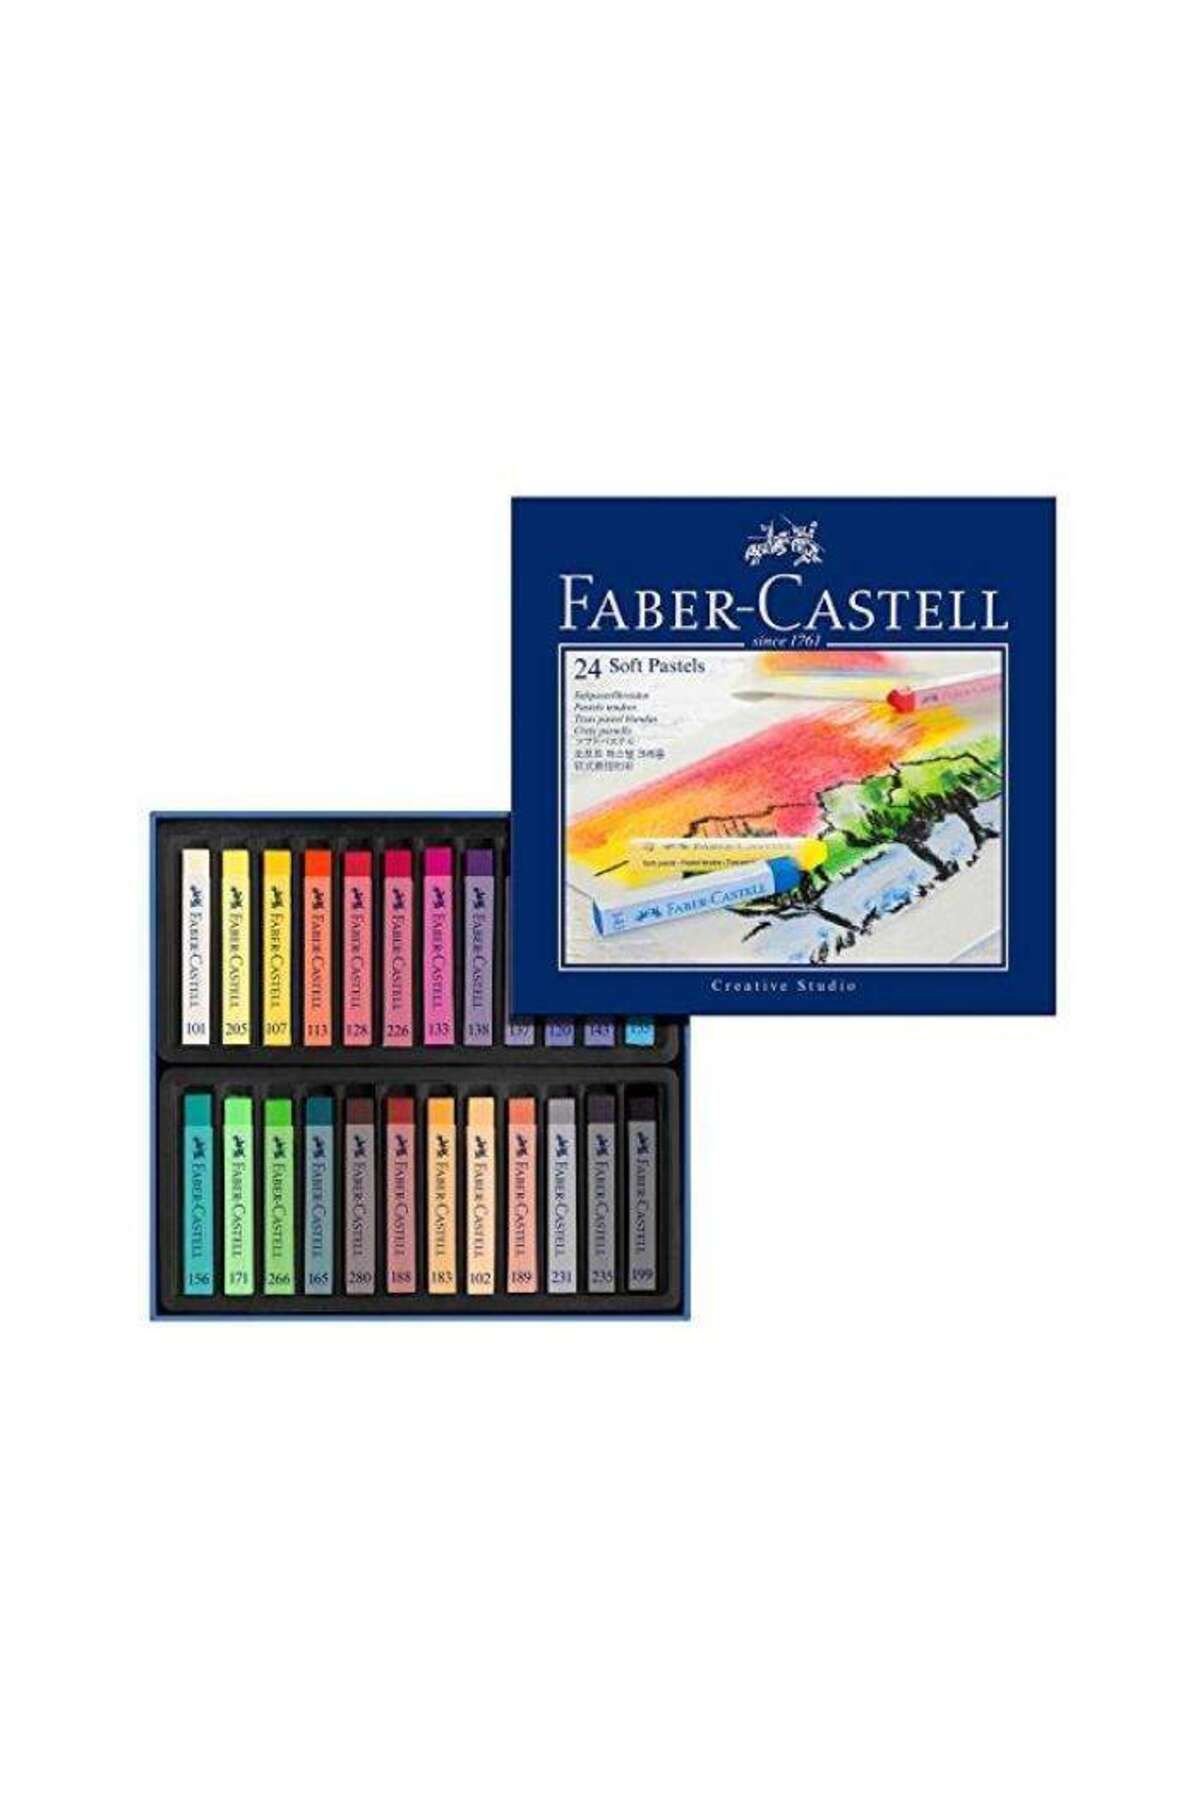 Faber Castell Creative Studio Soft Pastel 24 Set